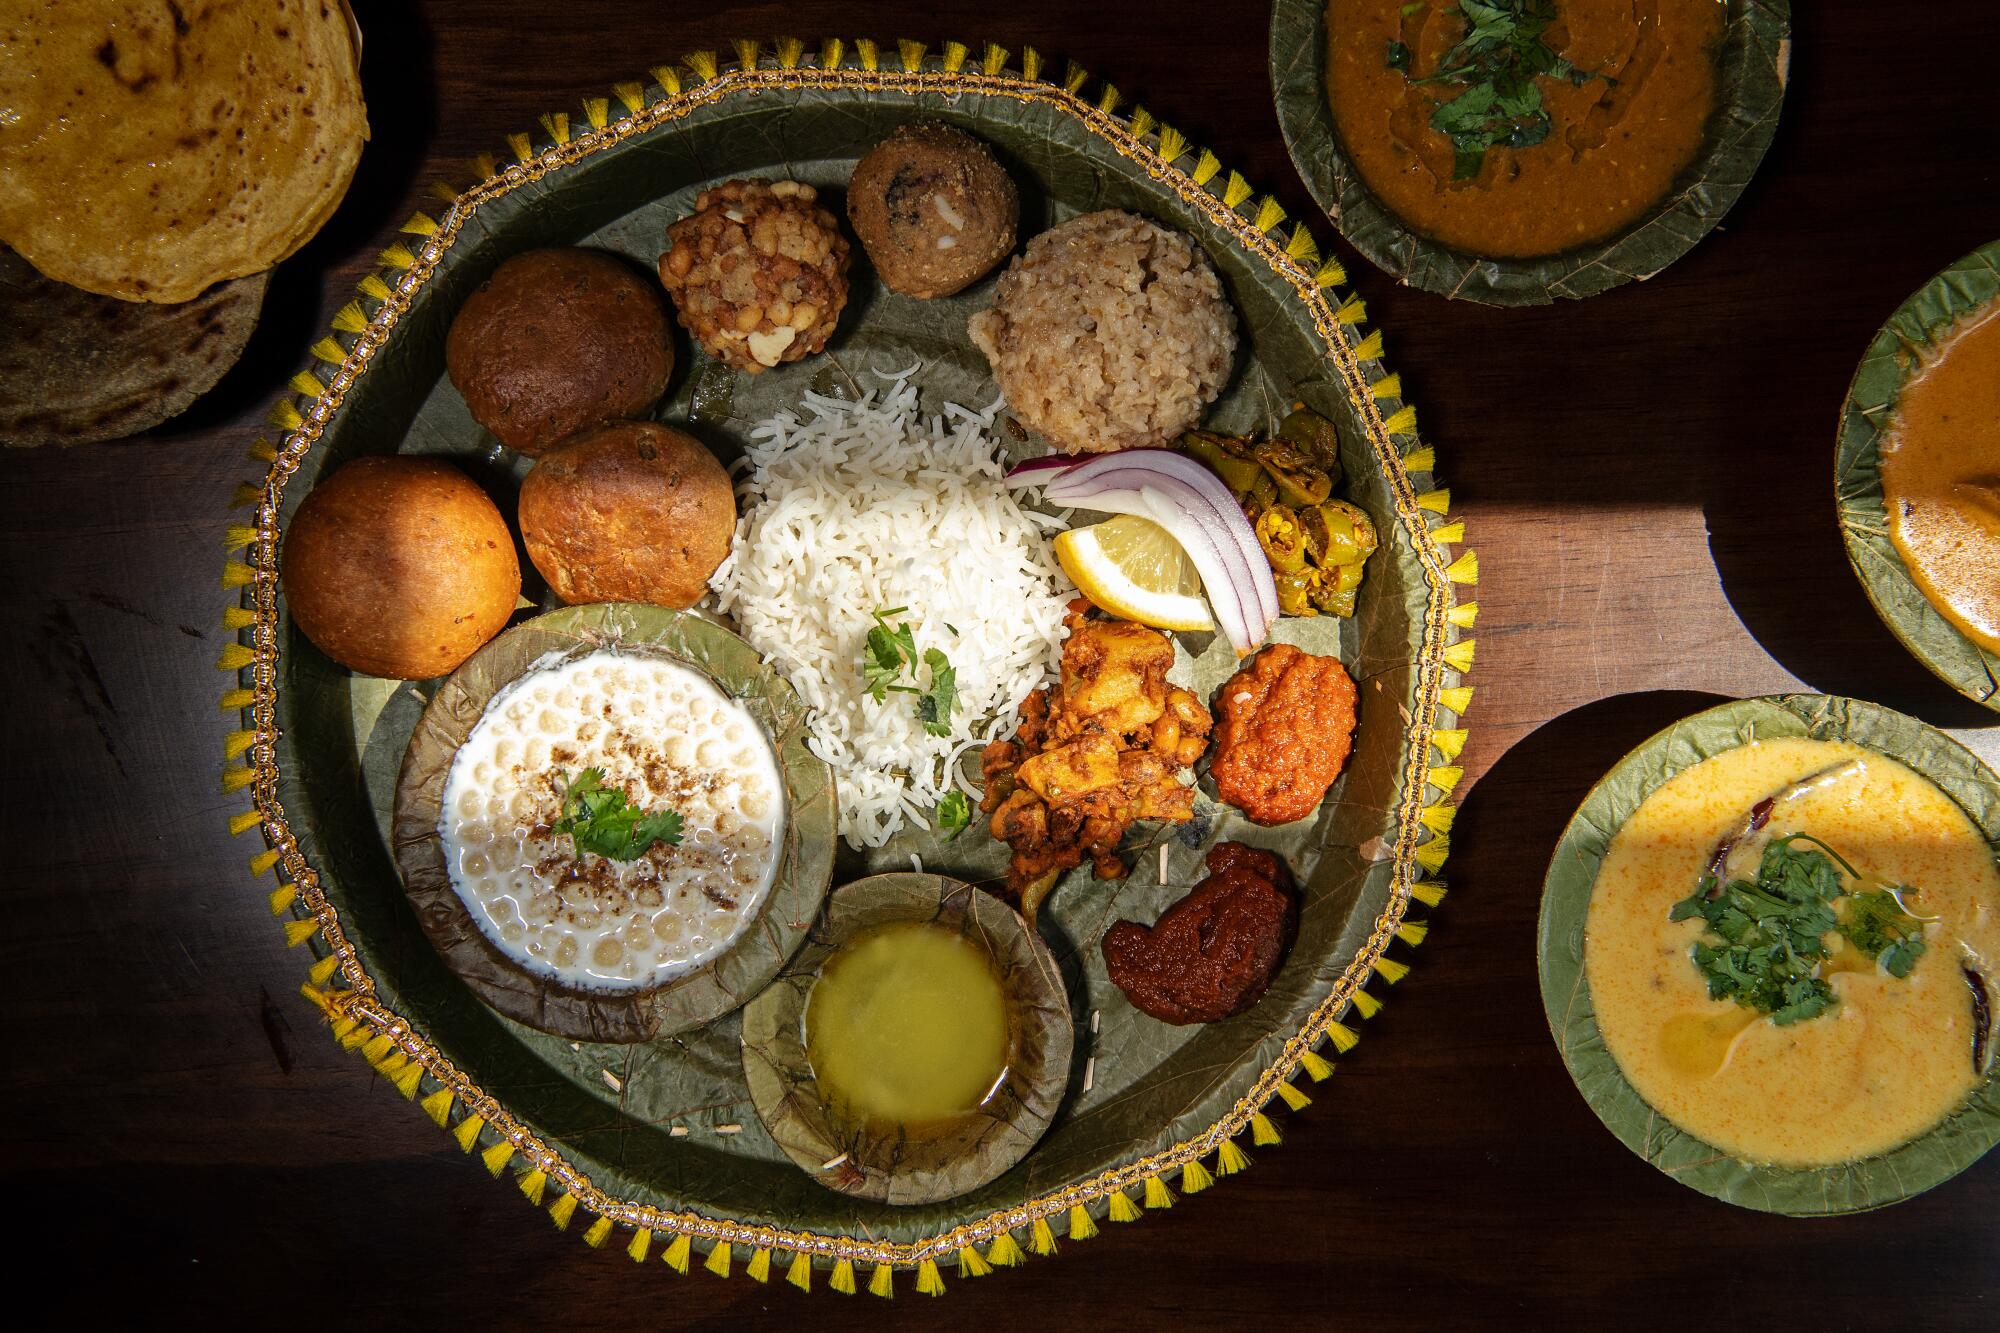 The maharaja thali platter at Bhookhe in Artesia